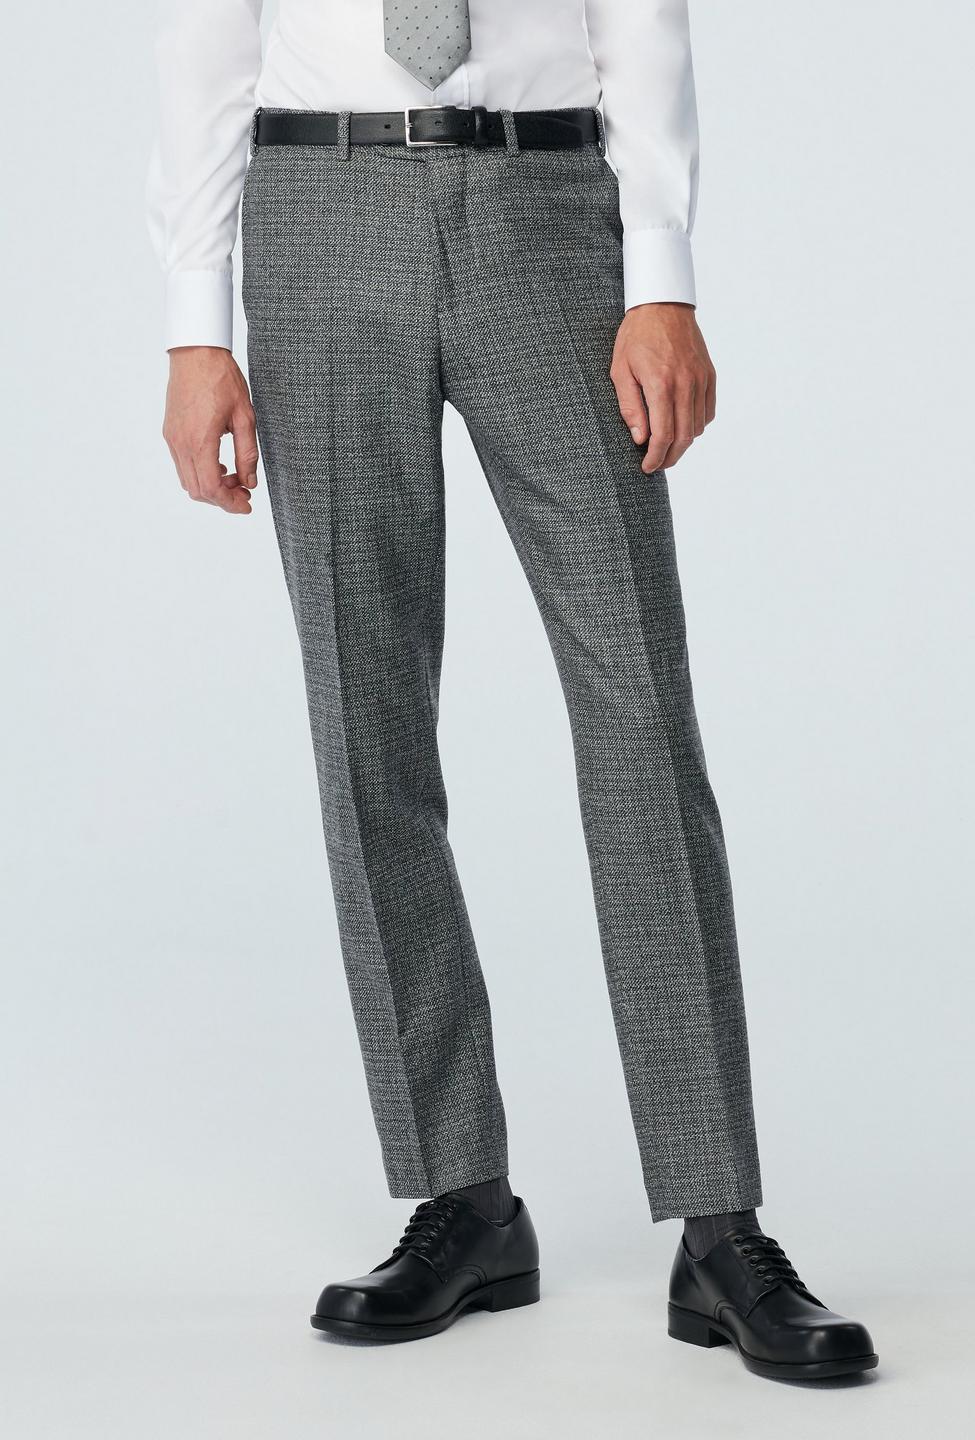 Newbridge Tweed Wool Stretch Light Gray Pants